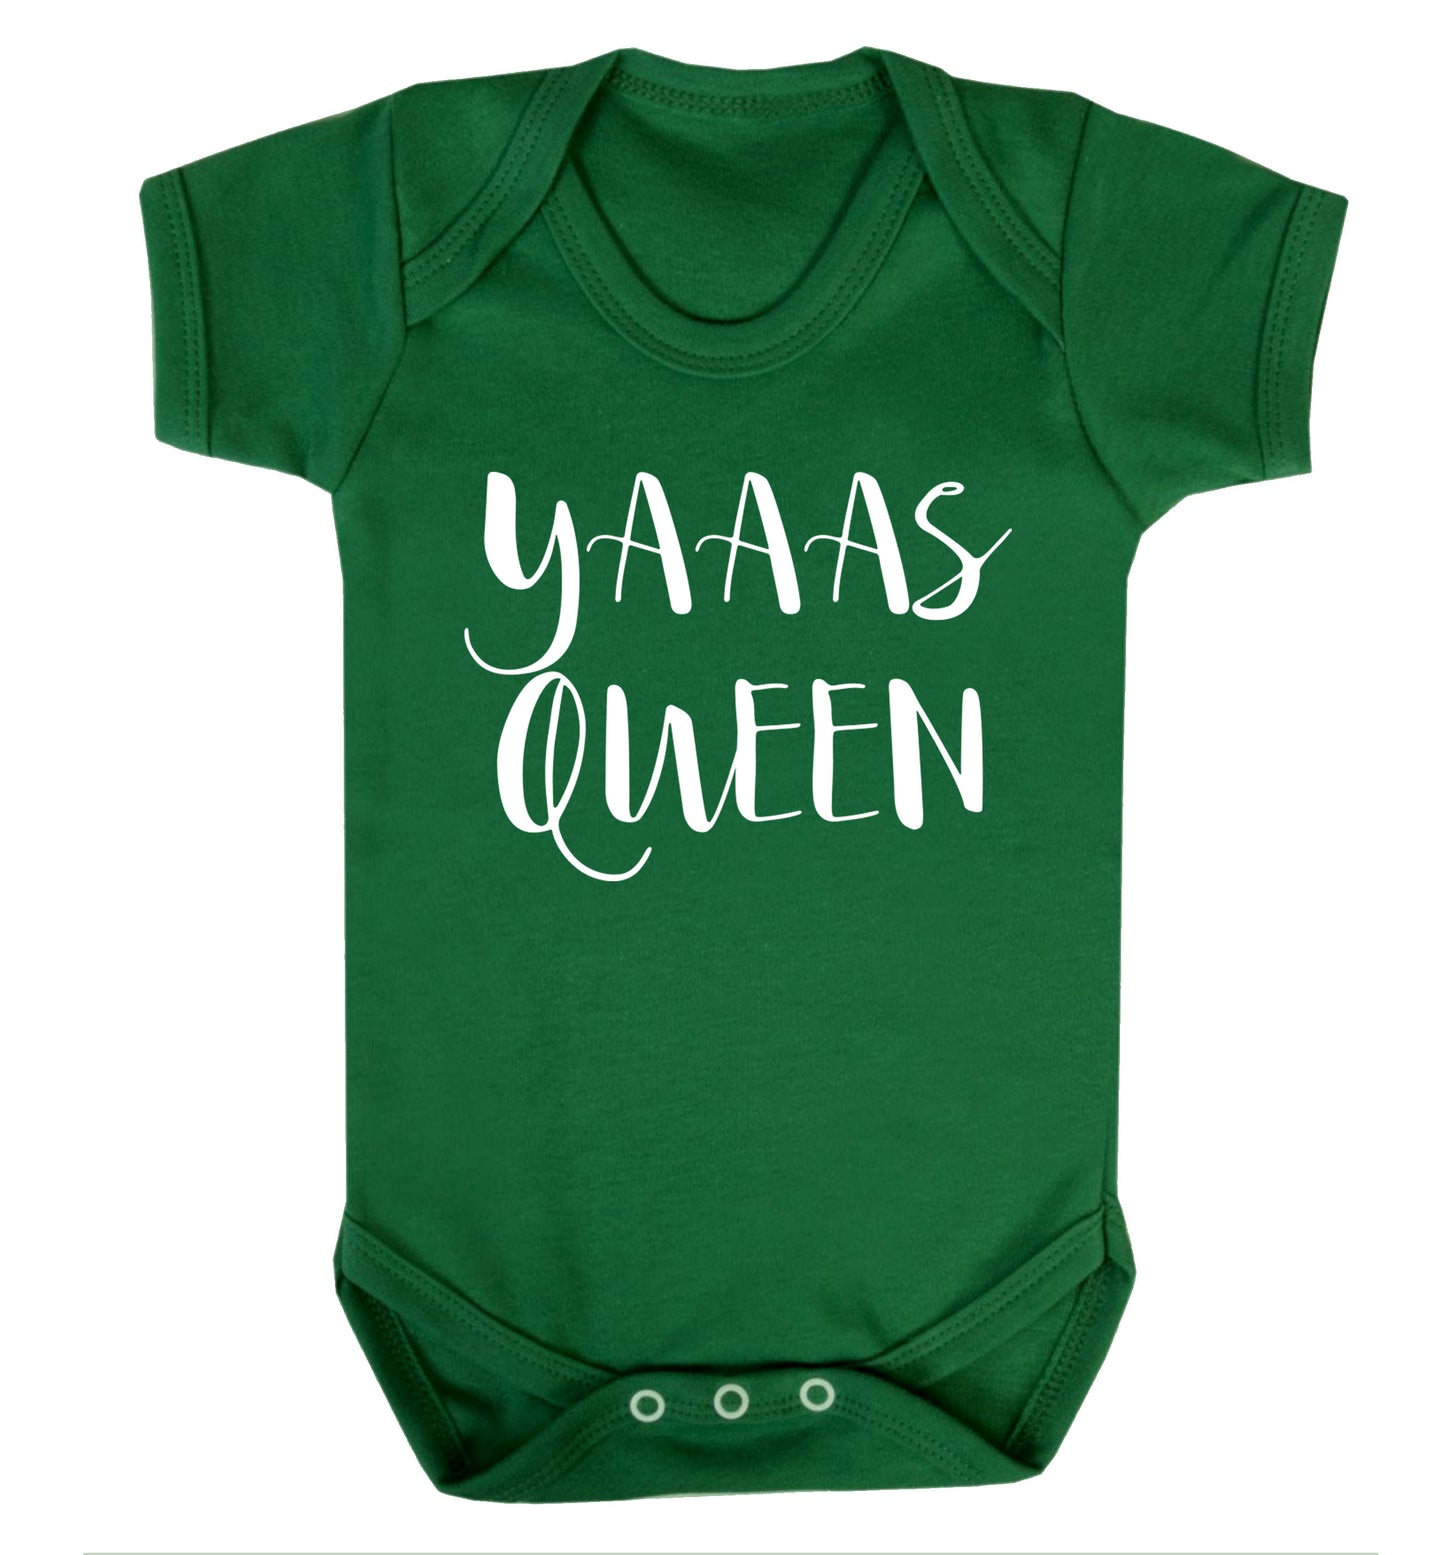 Yas Queen Baby Vest green 18-24 months